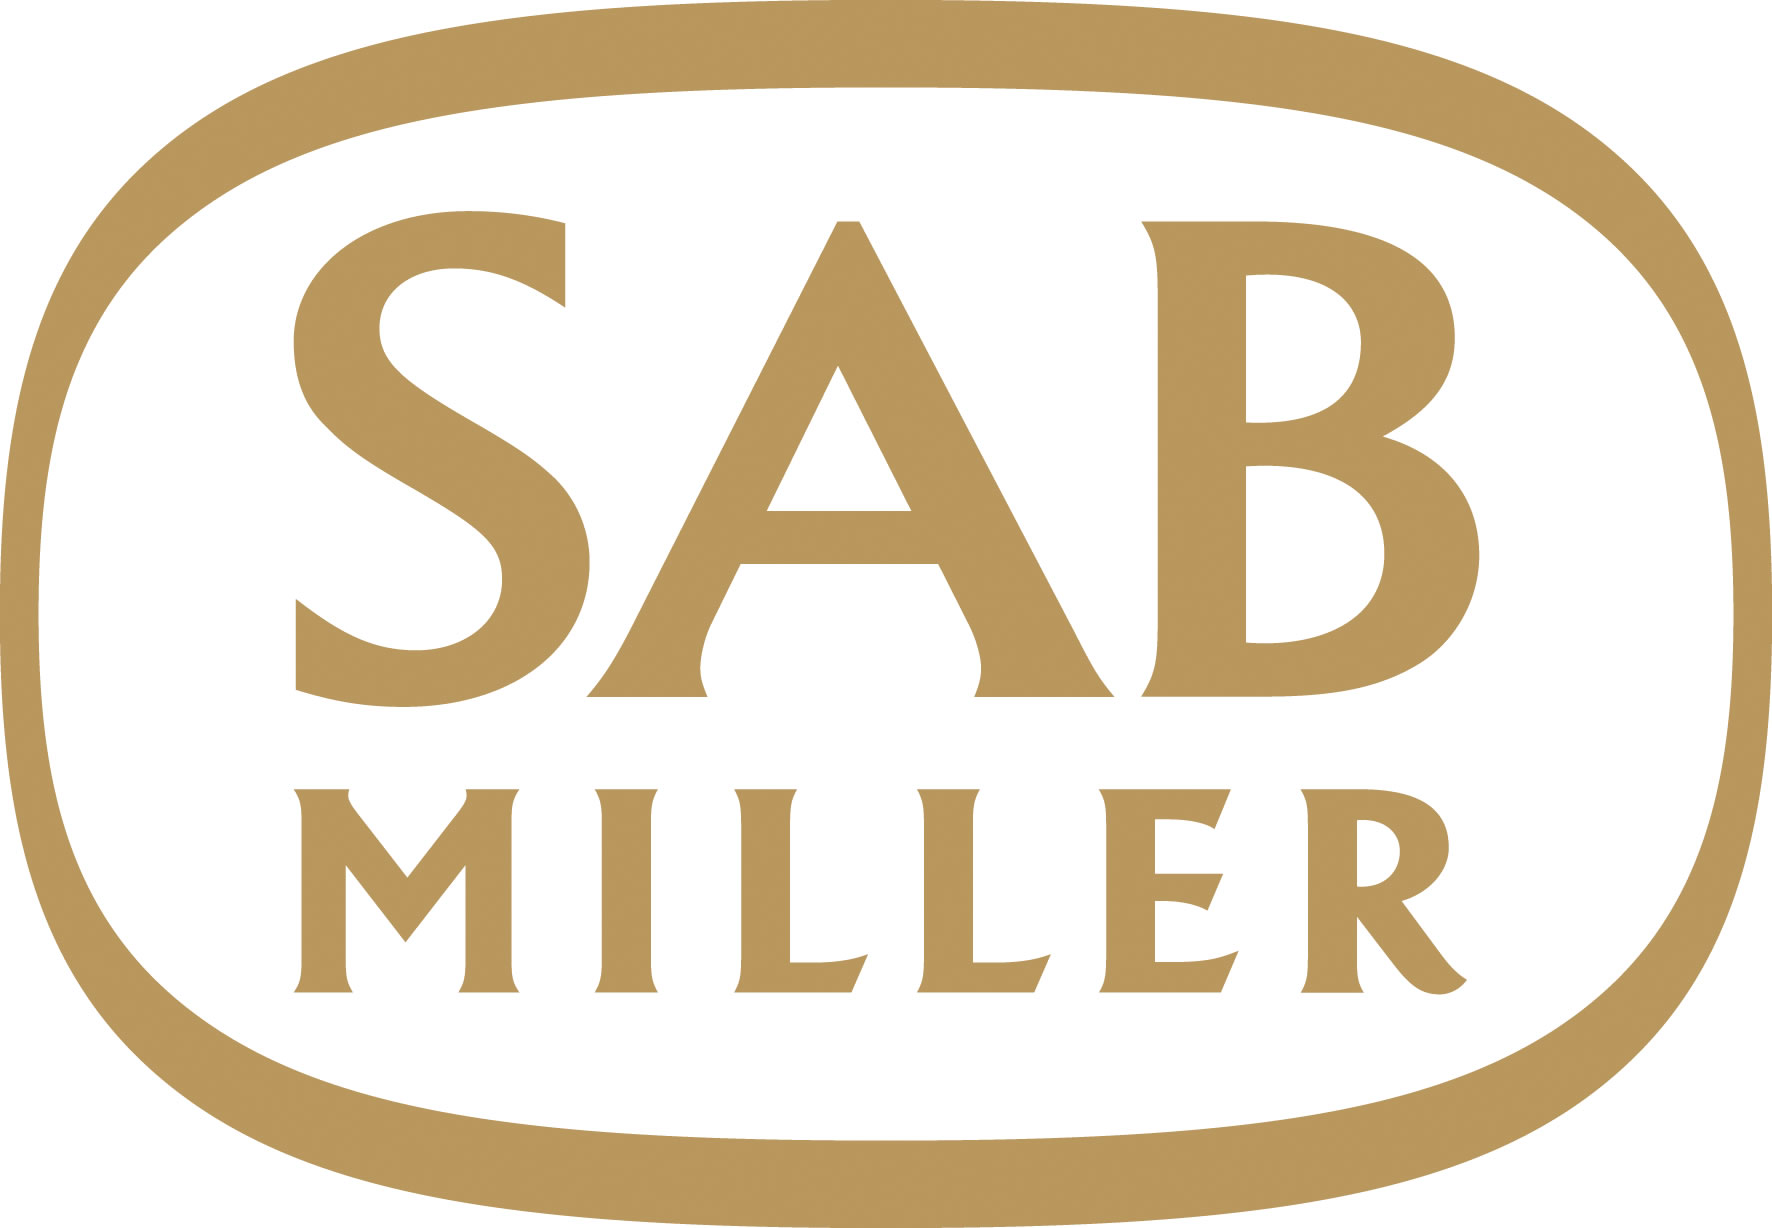 SABMiller plc jobs